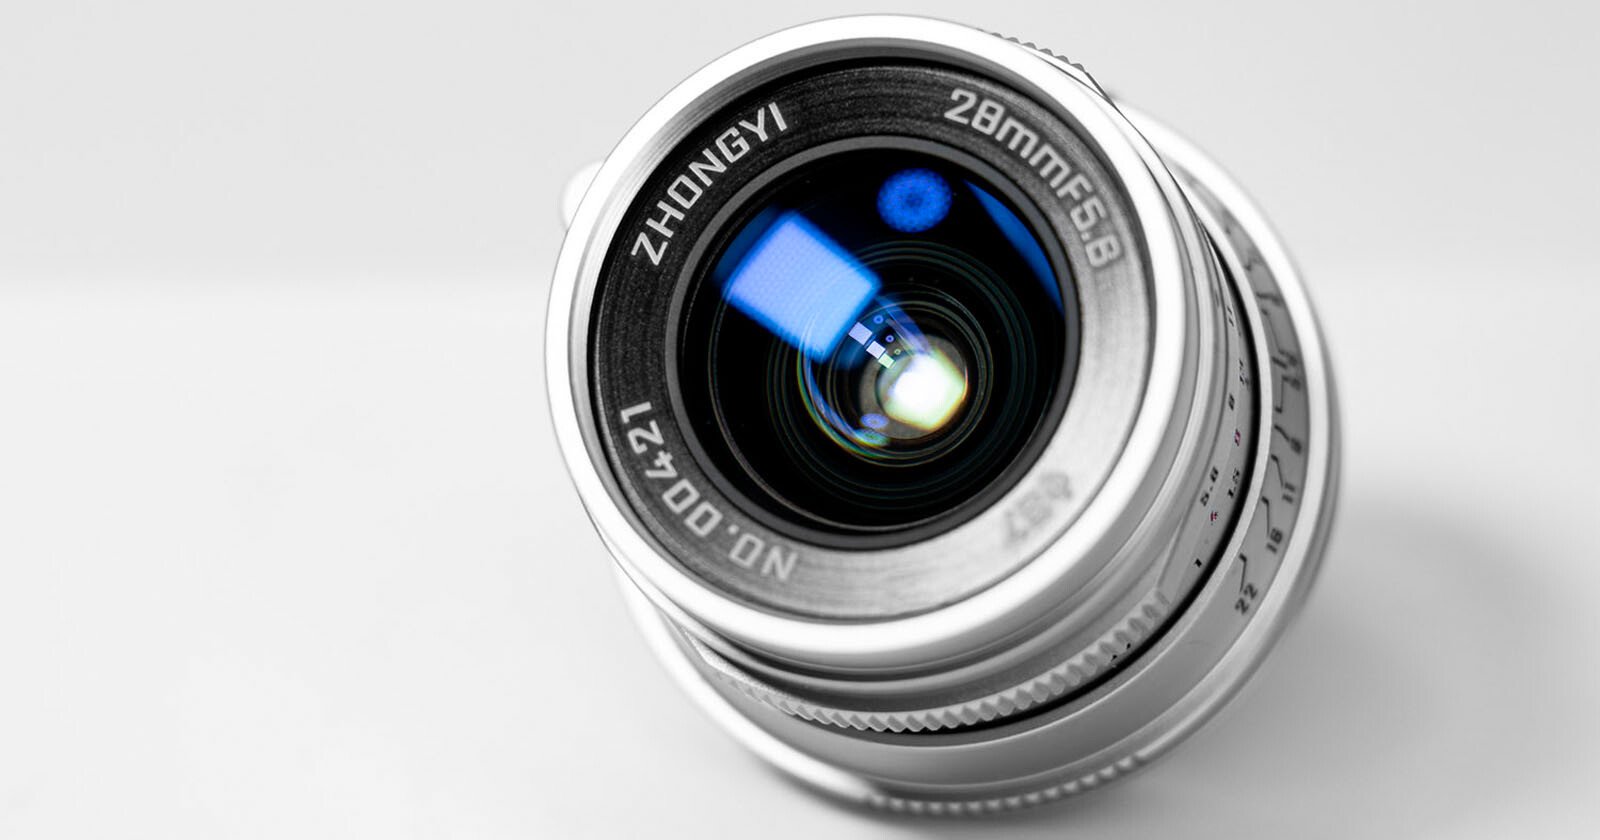 The Mitakon 28mm f/5.6 is a Cheap Recreation of a Leica Summaron